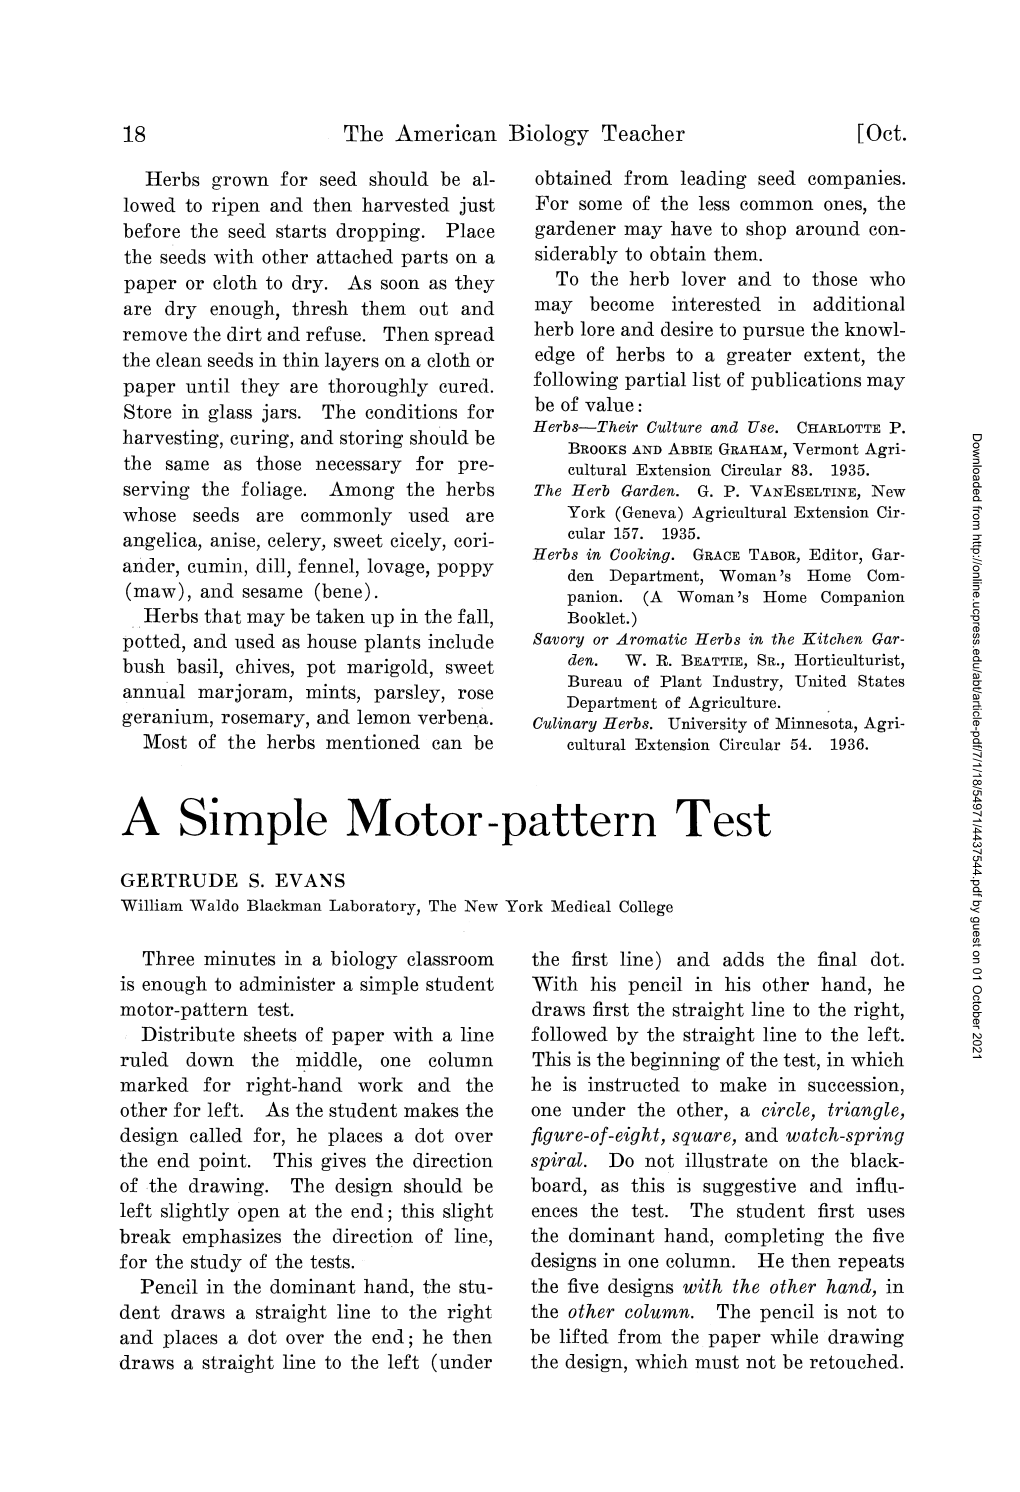 A Simple Motor-Pattern Test 19